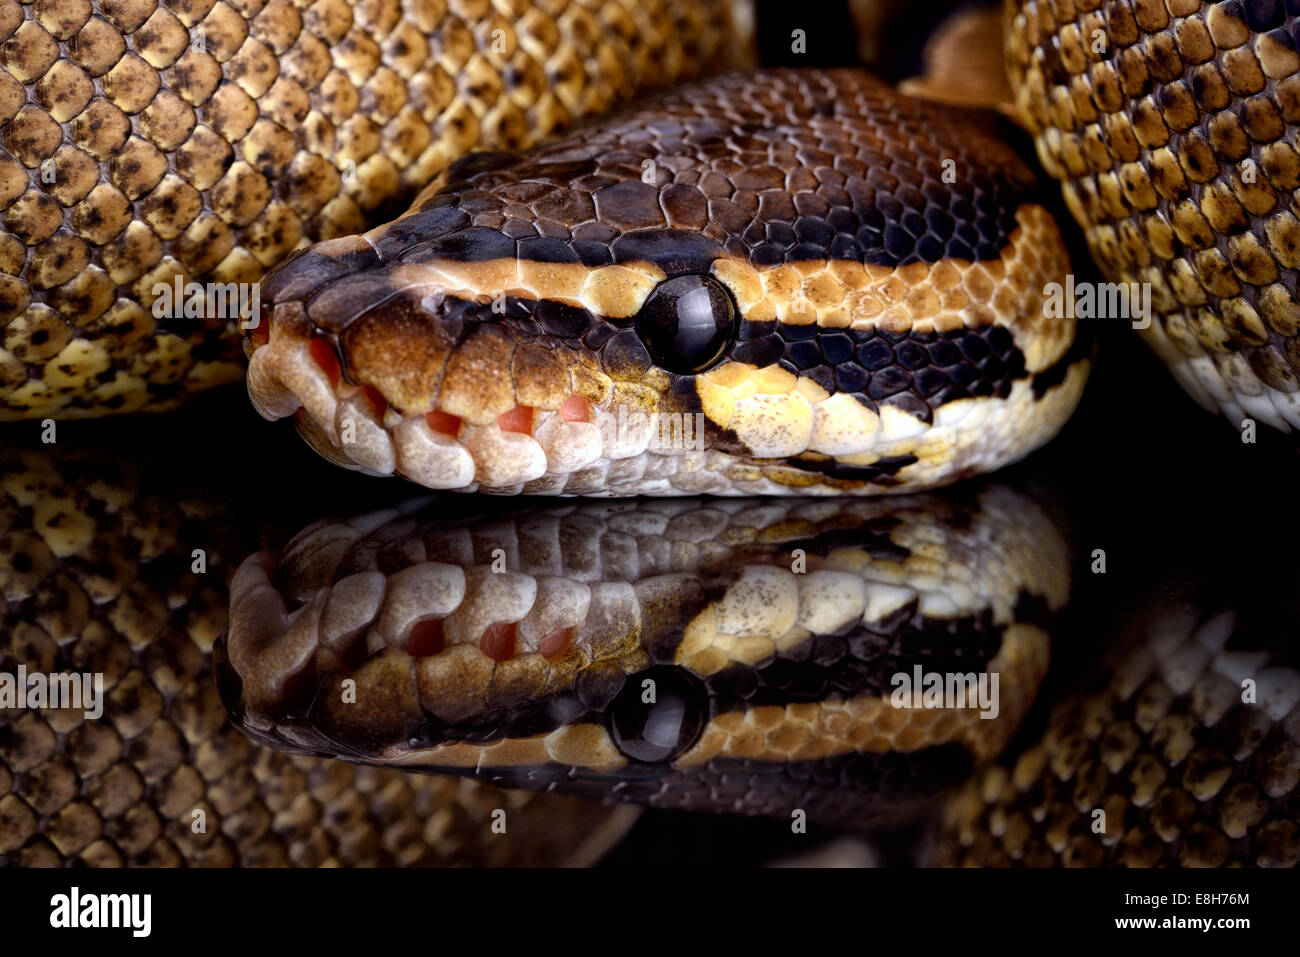 Royal Python, Python regius, partial view Stock Photo